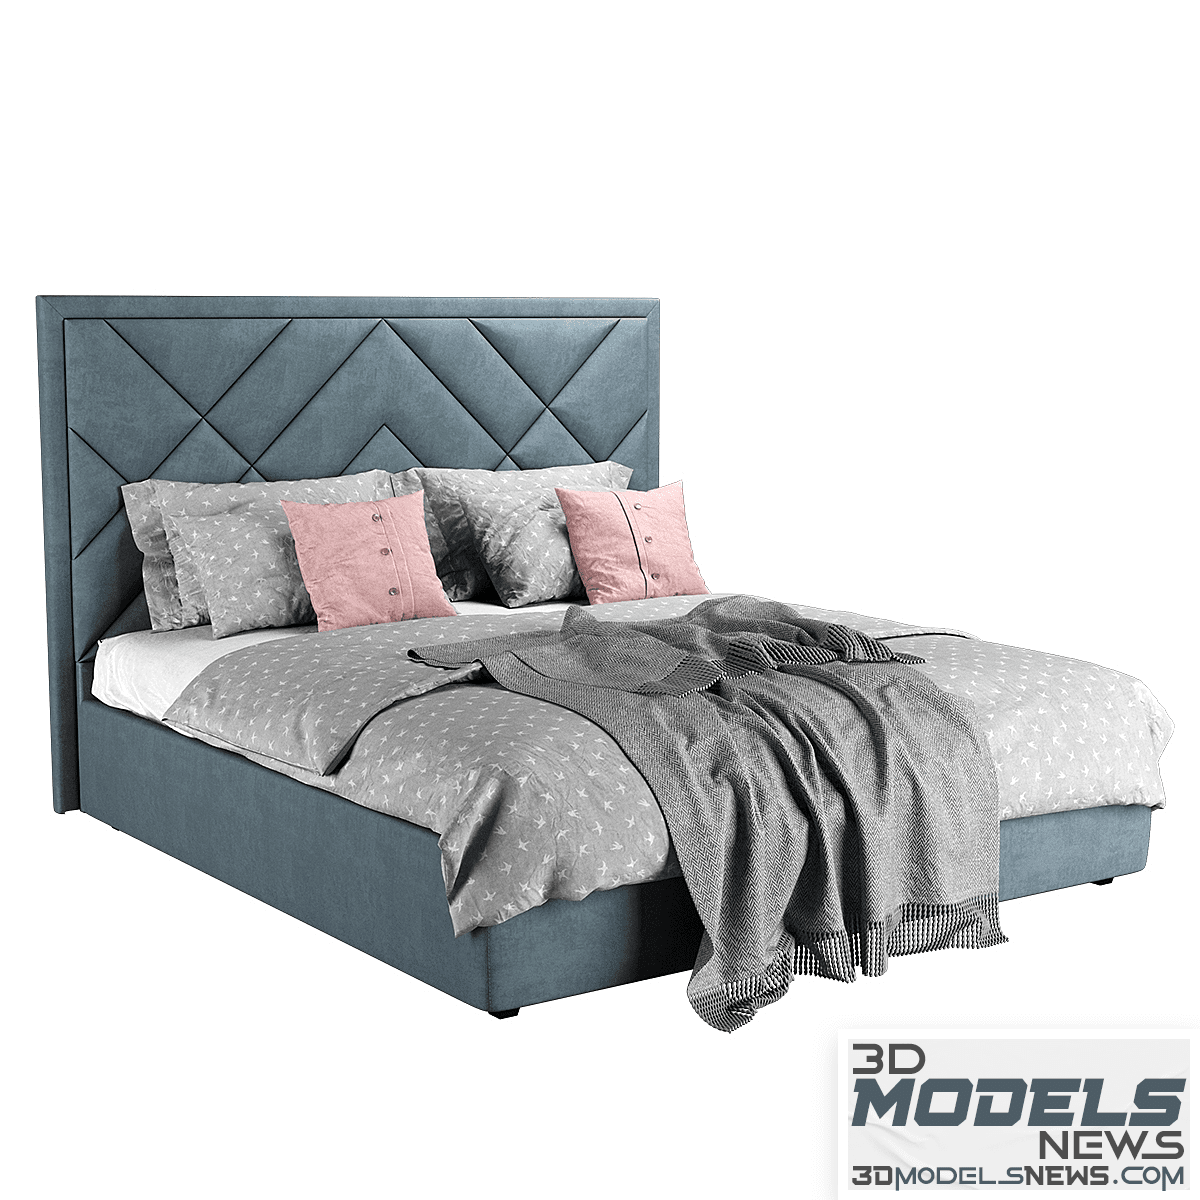 Olla kros sola bed model 1